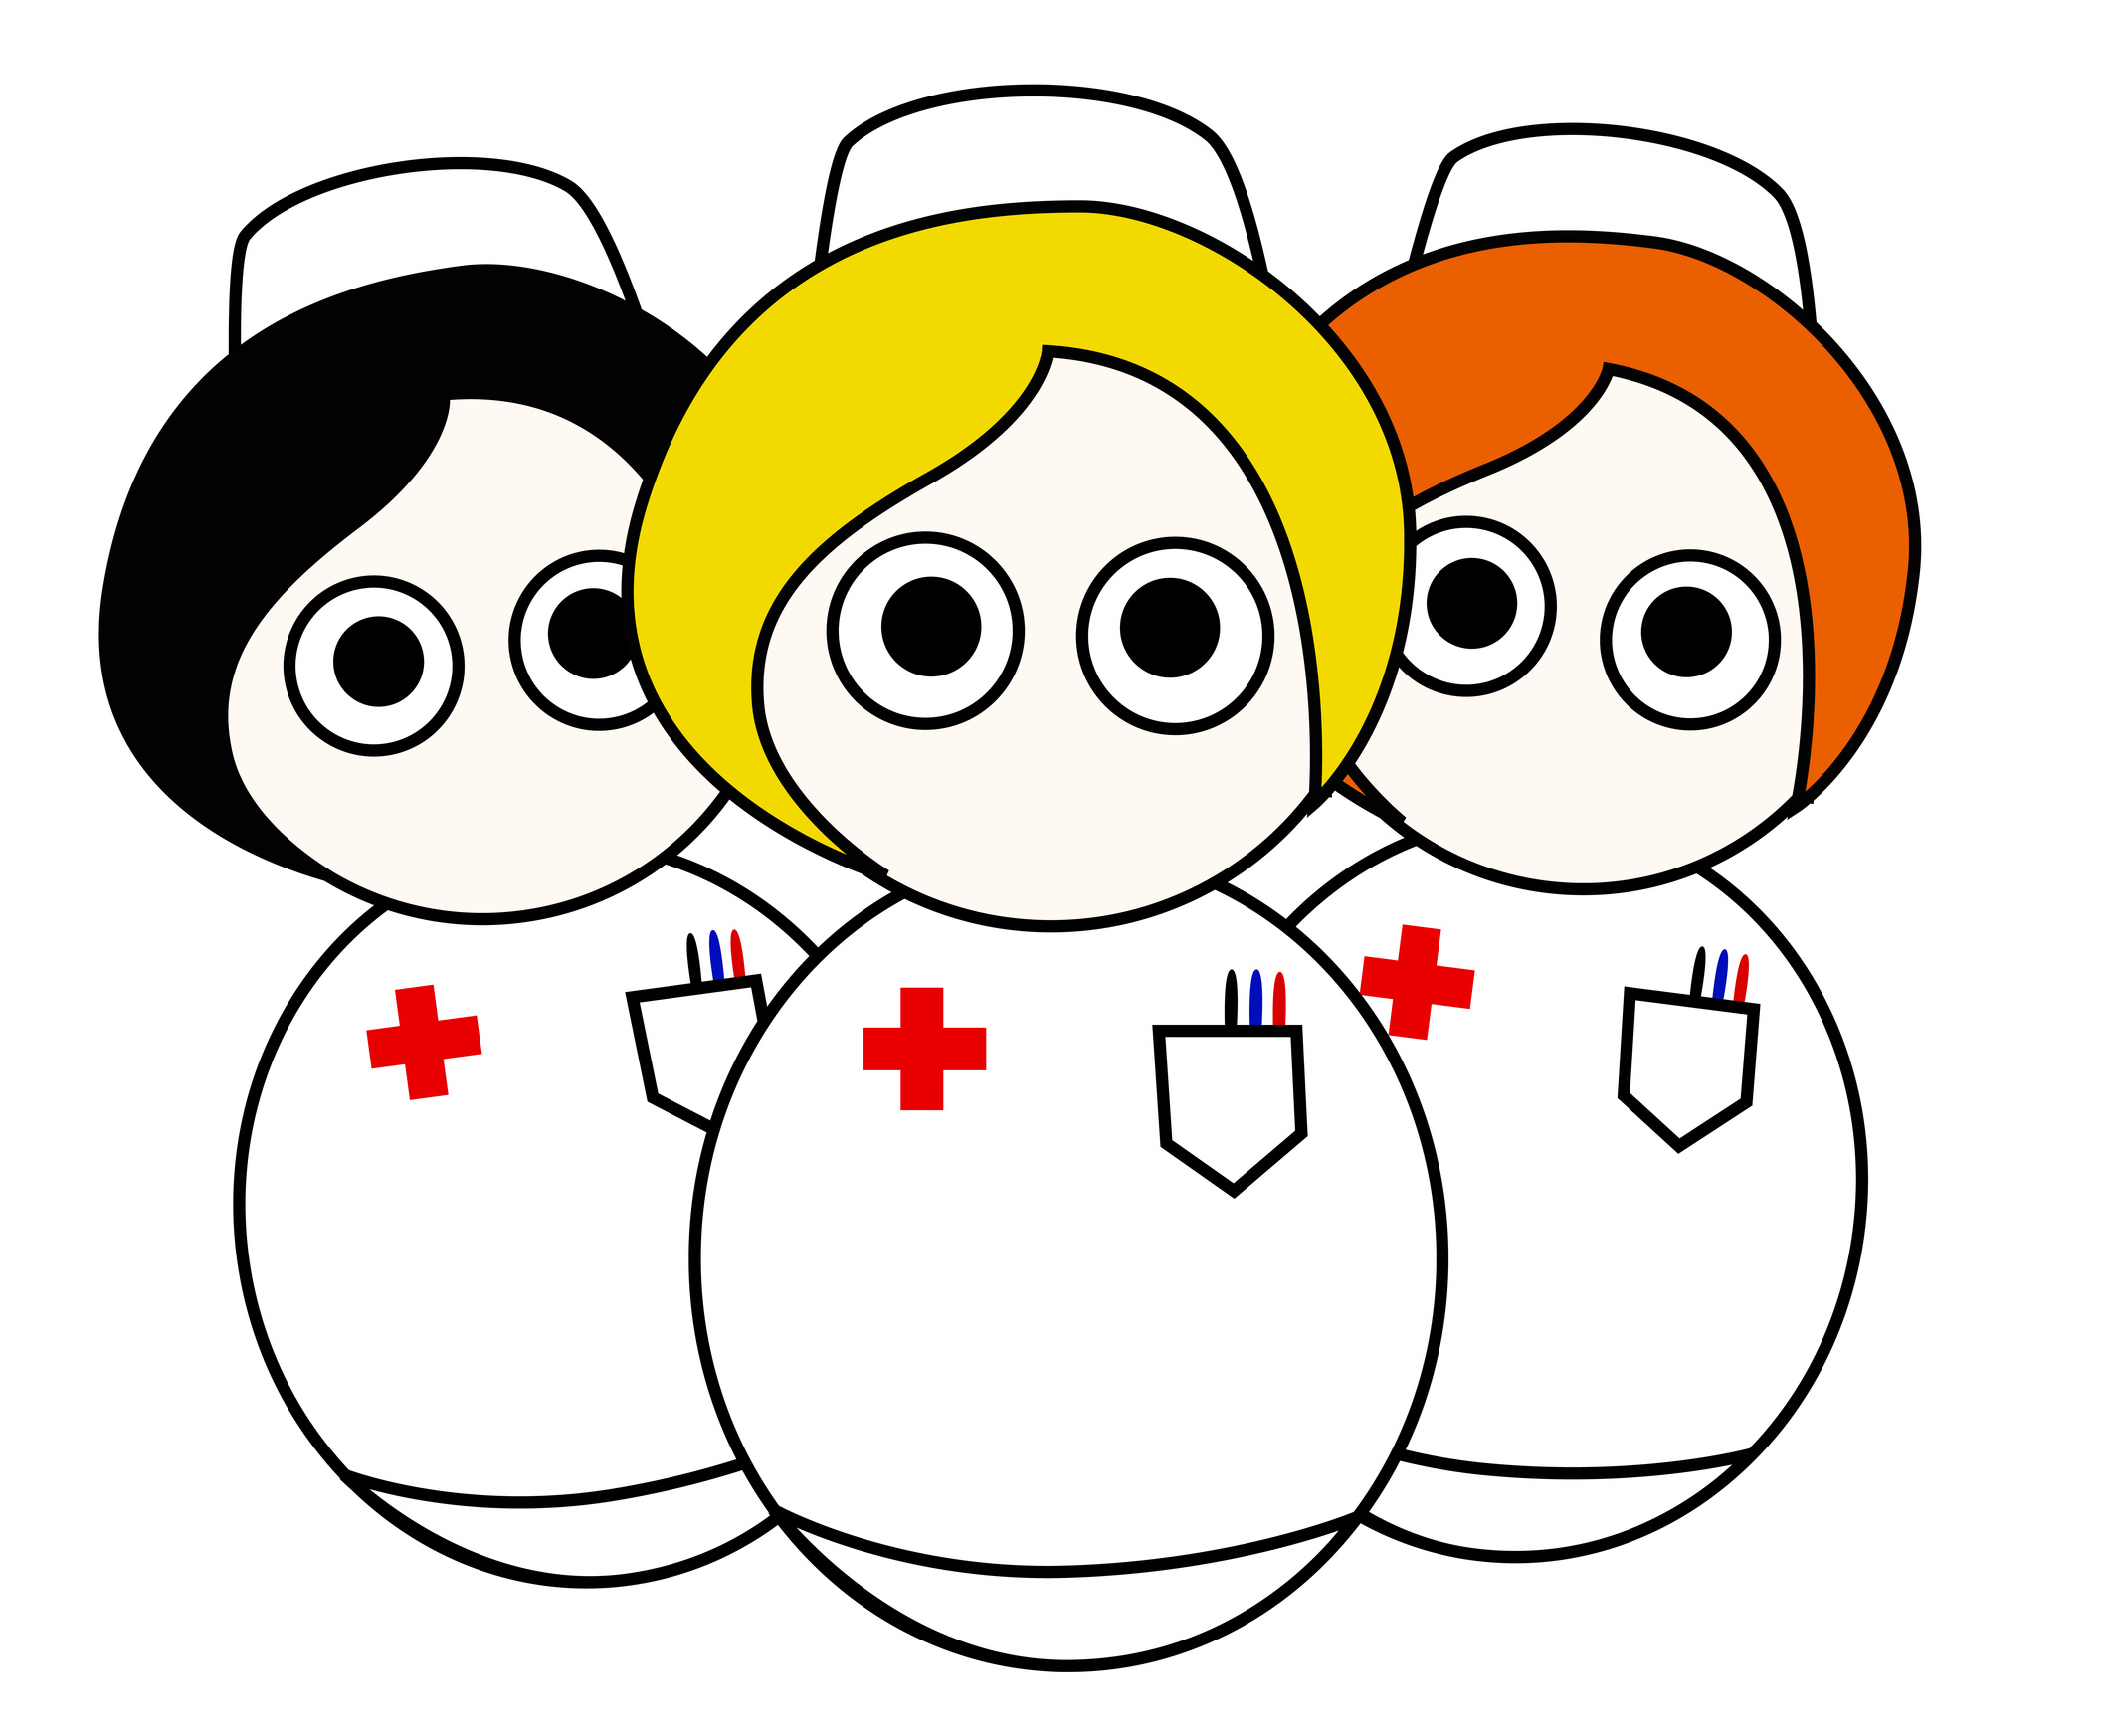 Nursing Cartoon Images - ClipArt Best